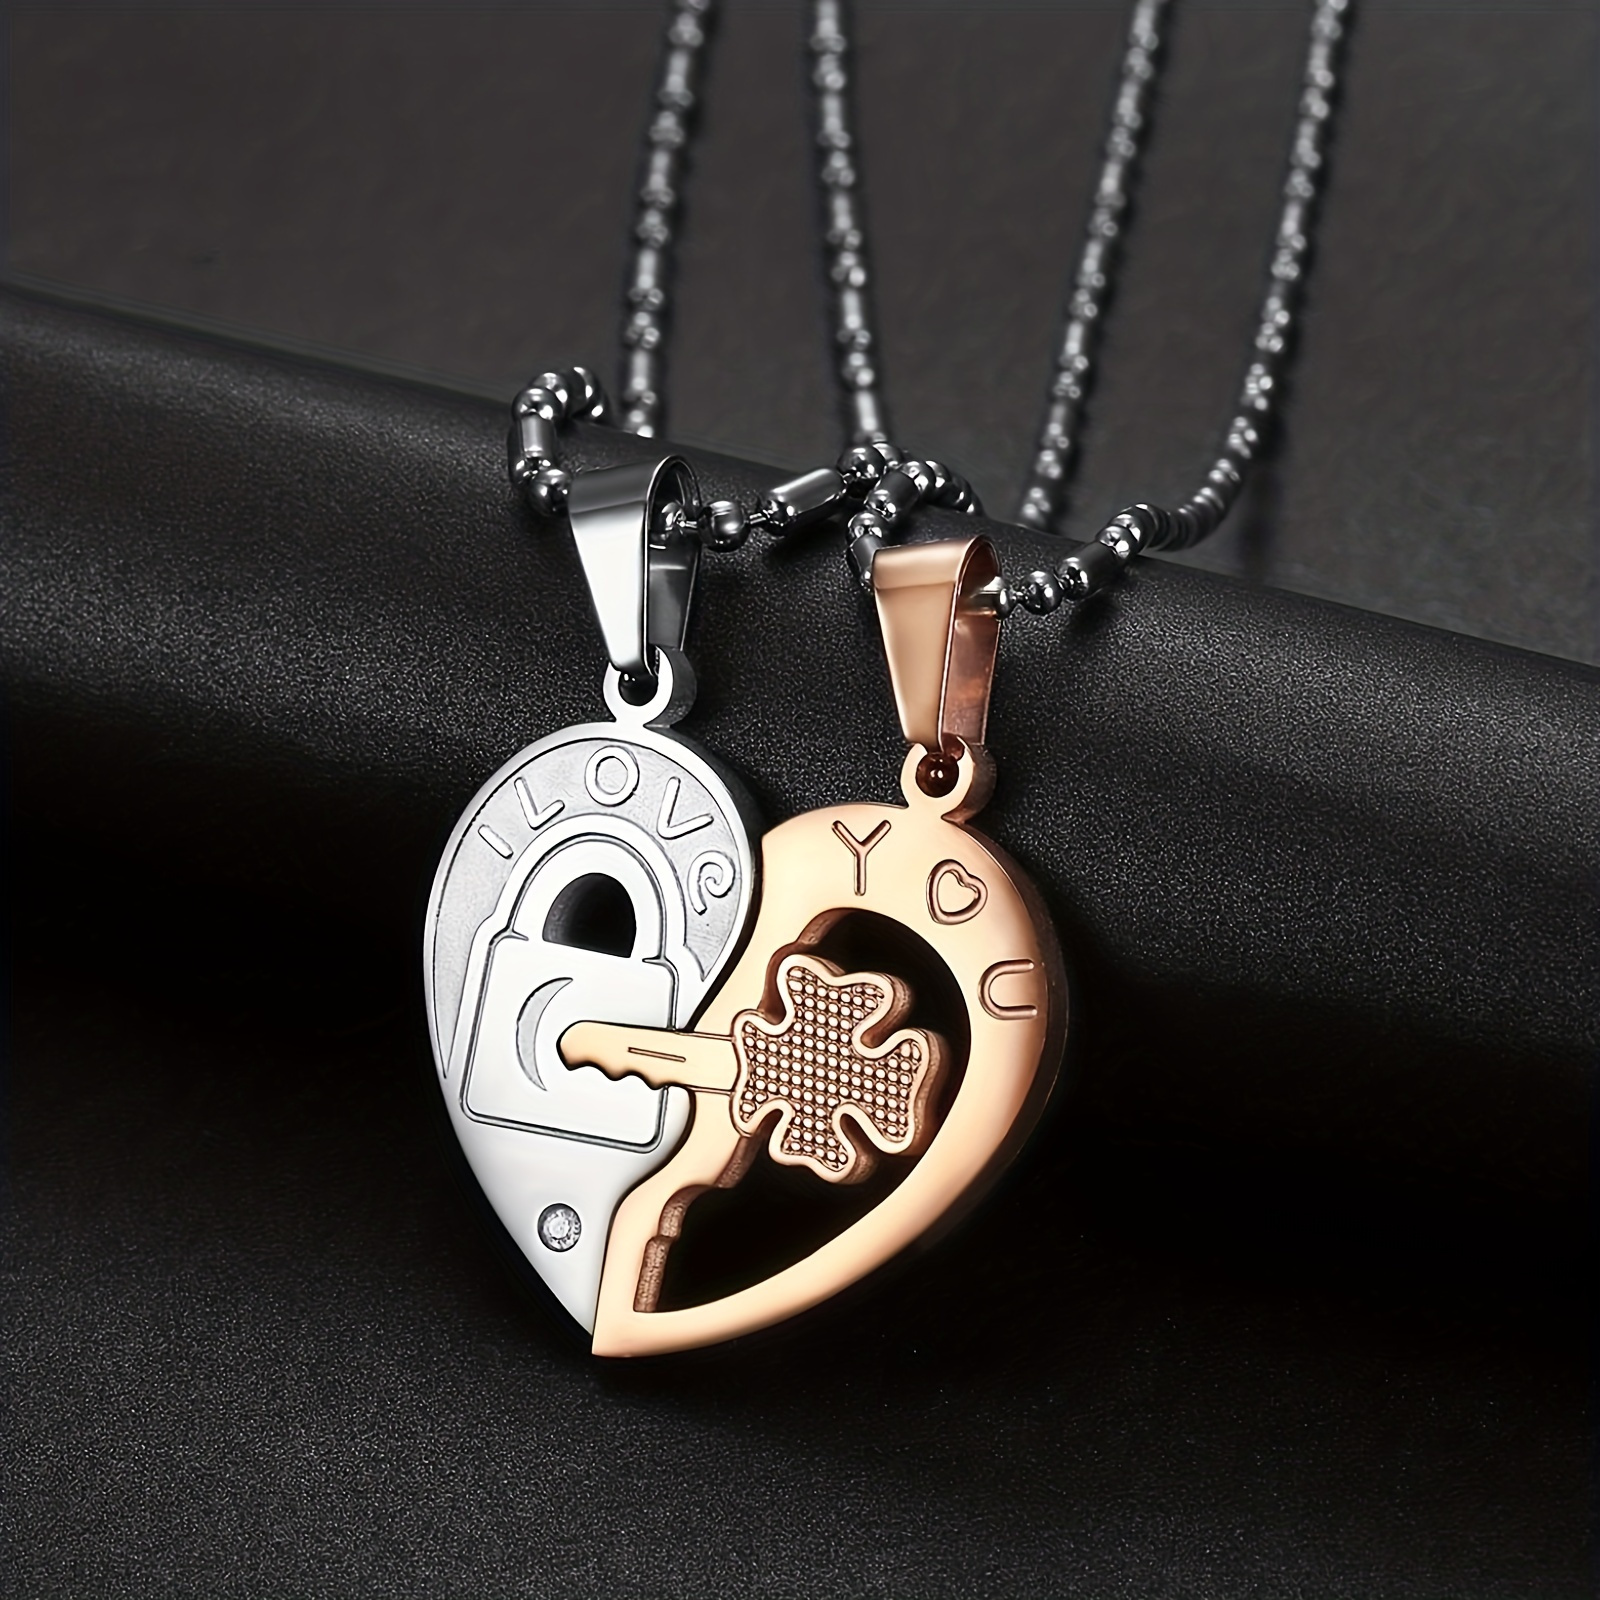 Key & Lock Necklace Pendant Friendship Adjustable Necklace Couple Friend Family Wish Pinky Promise C